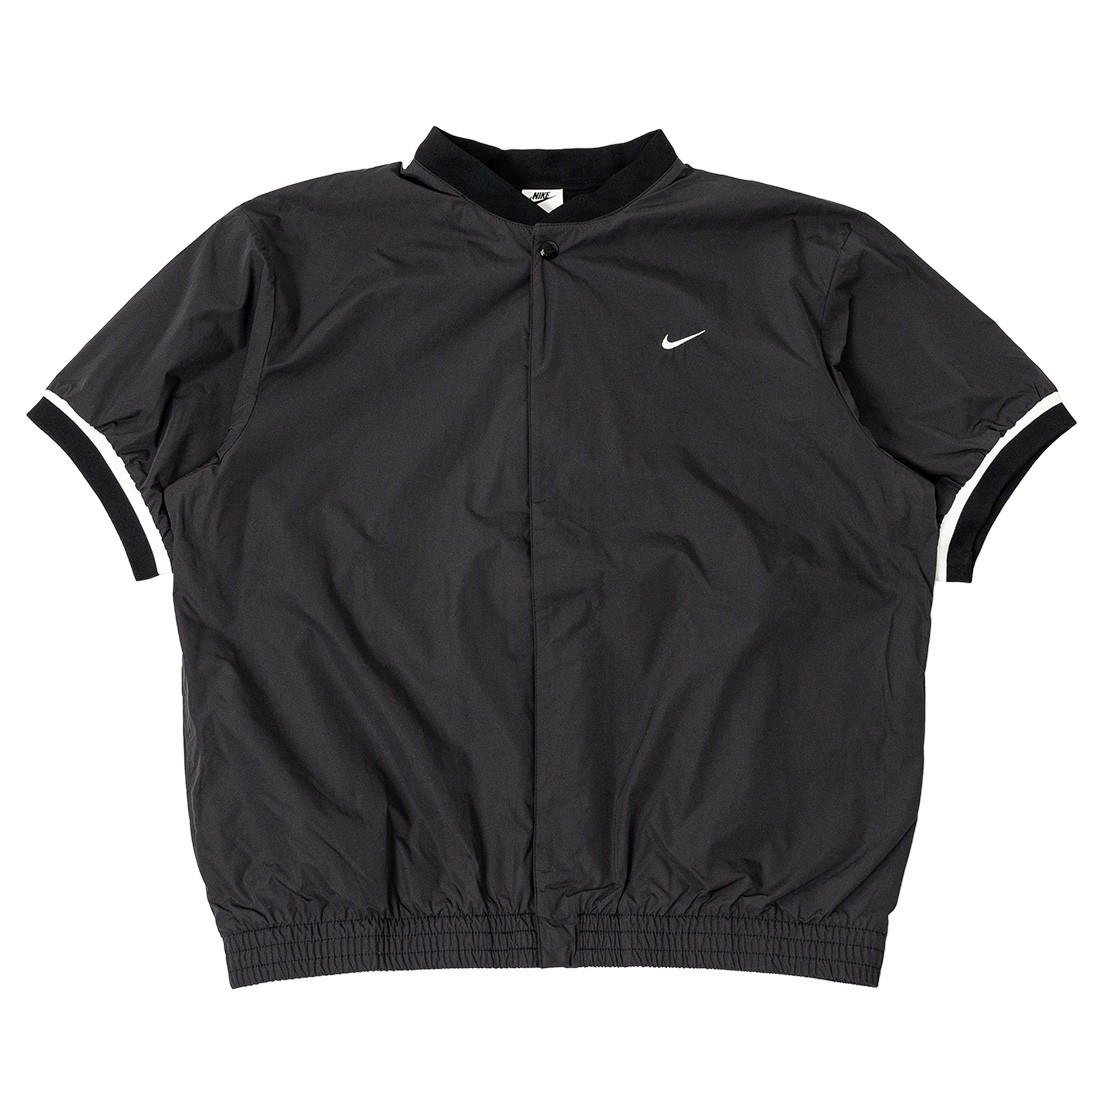 Nike Men Authentics Short Sleeve Shirt (black / white)